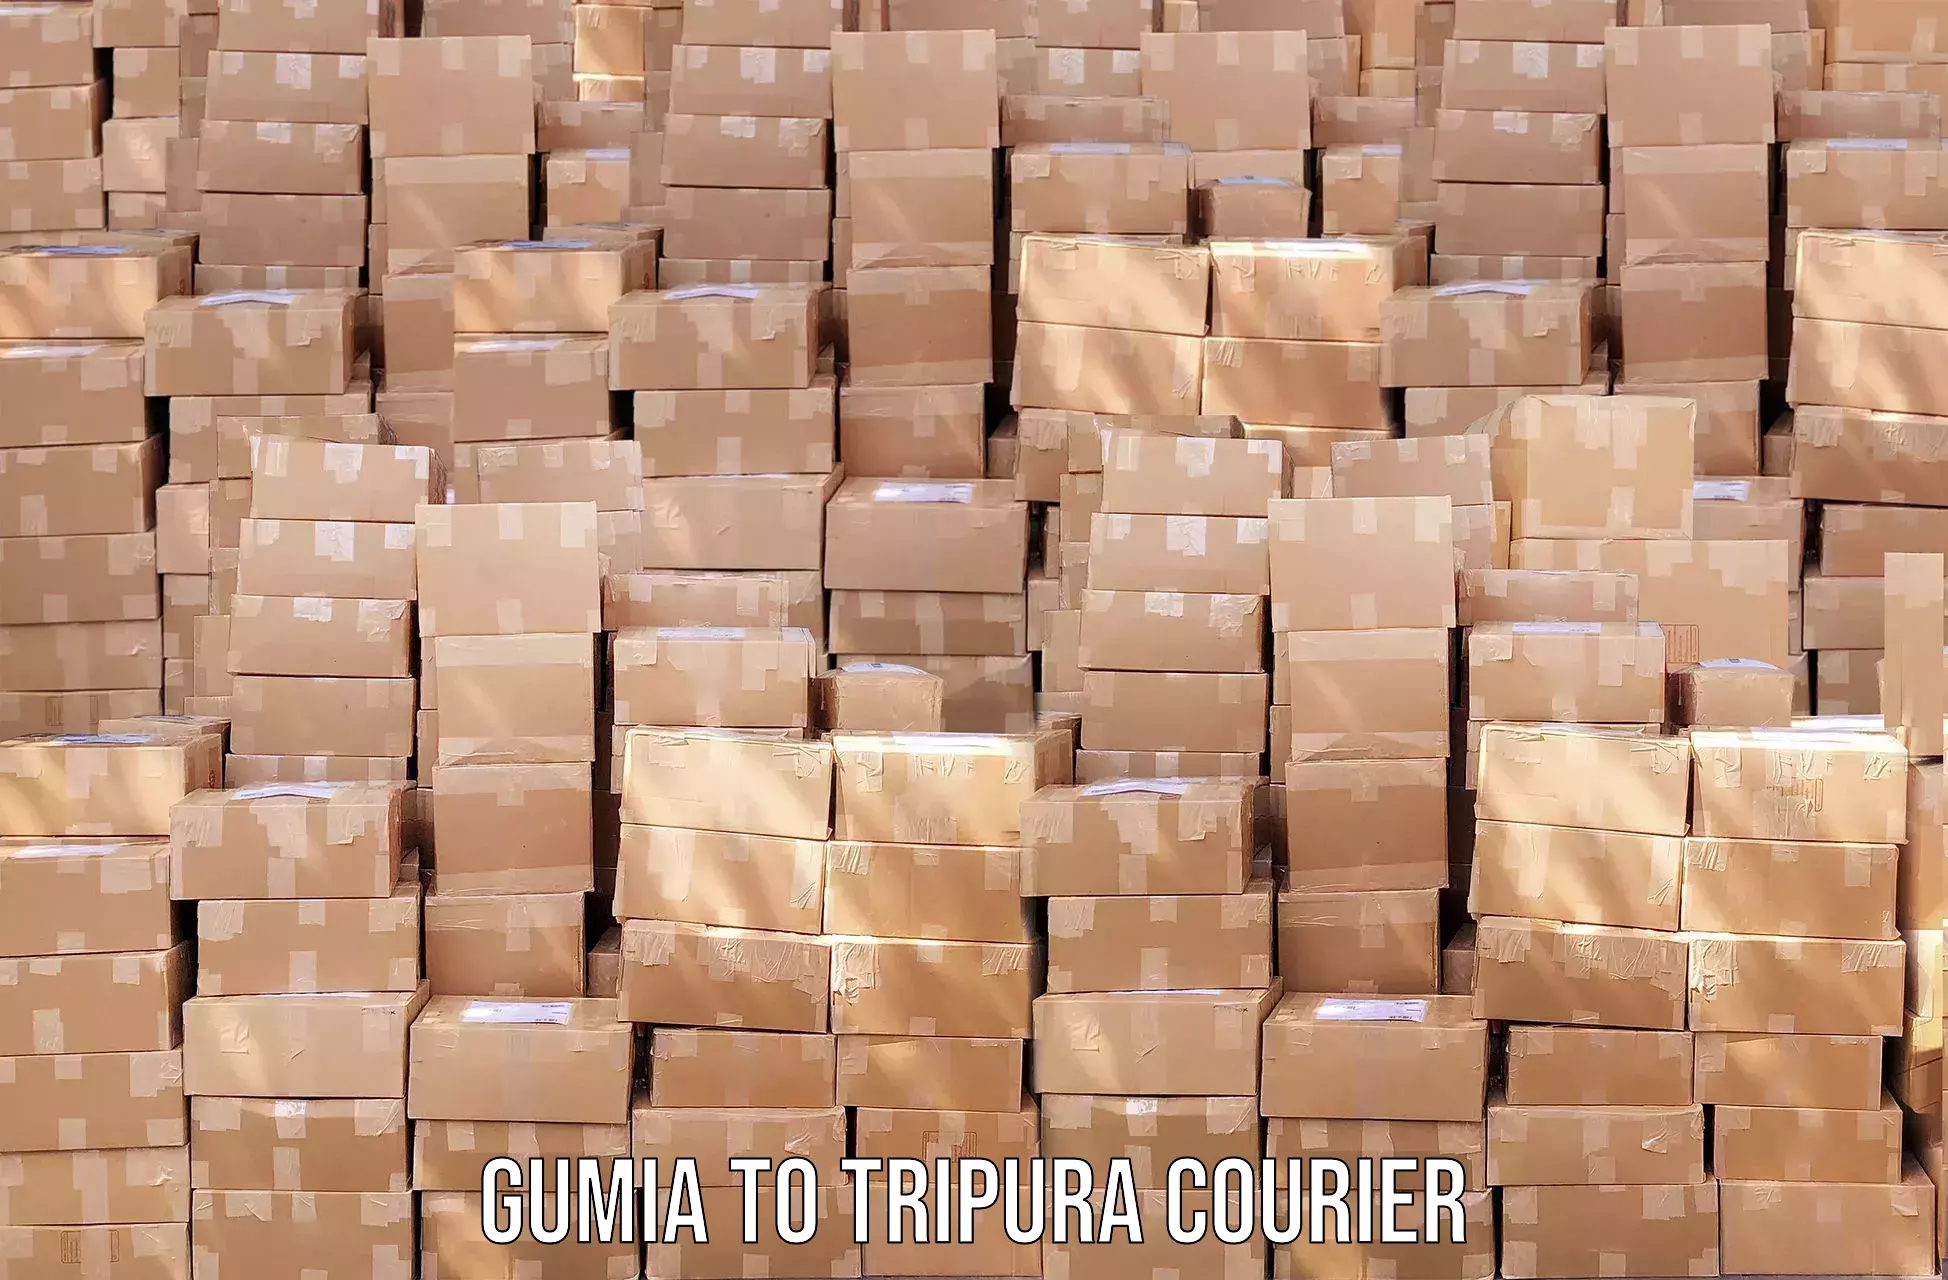 Express mail service Gumia to Tripura